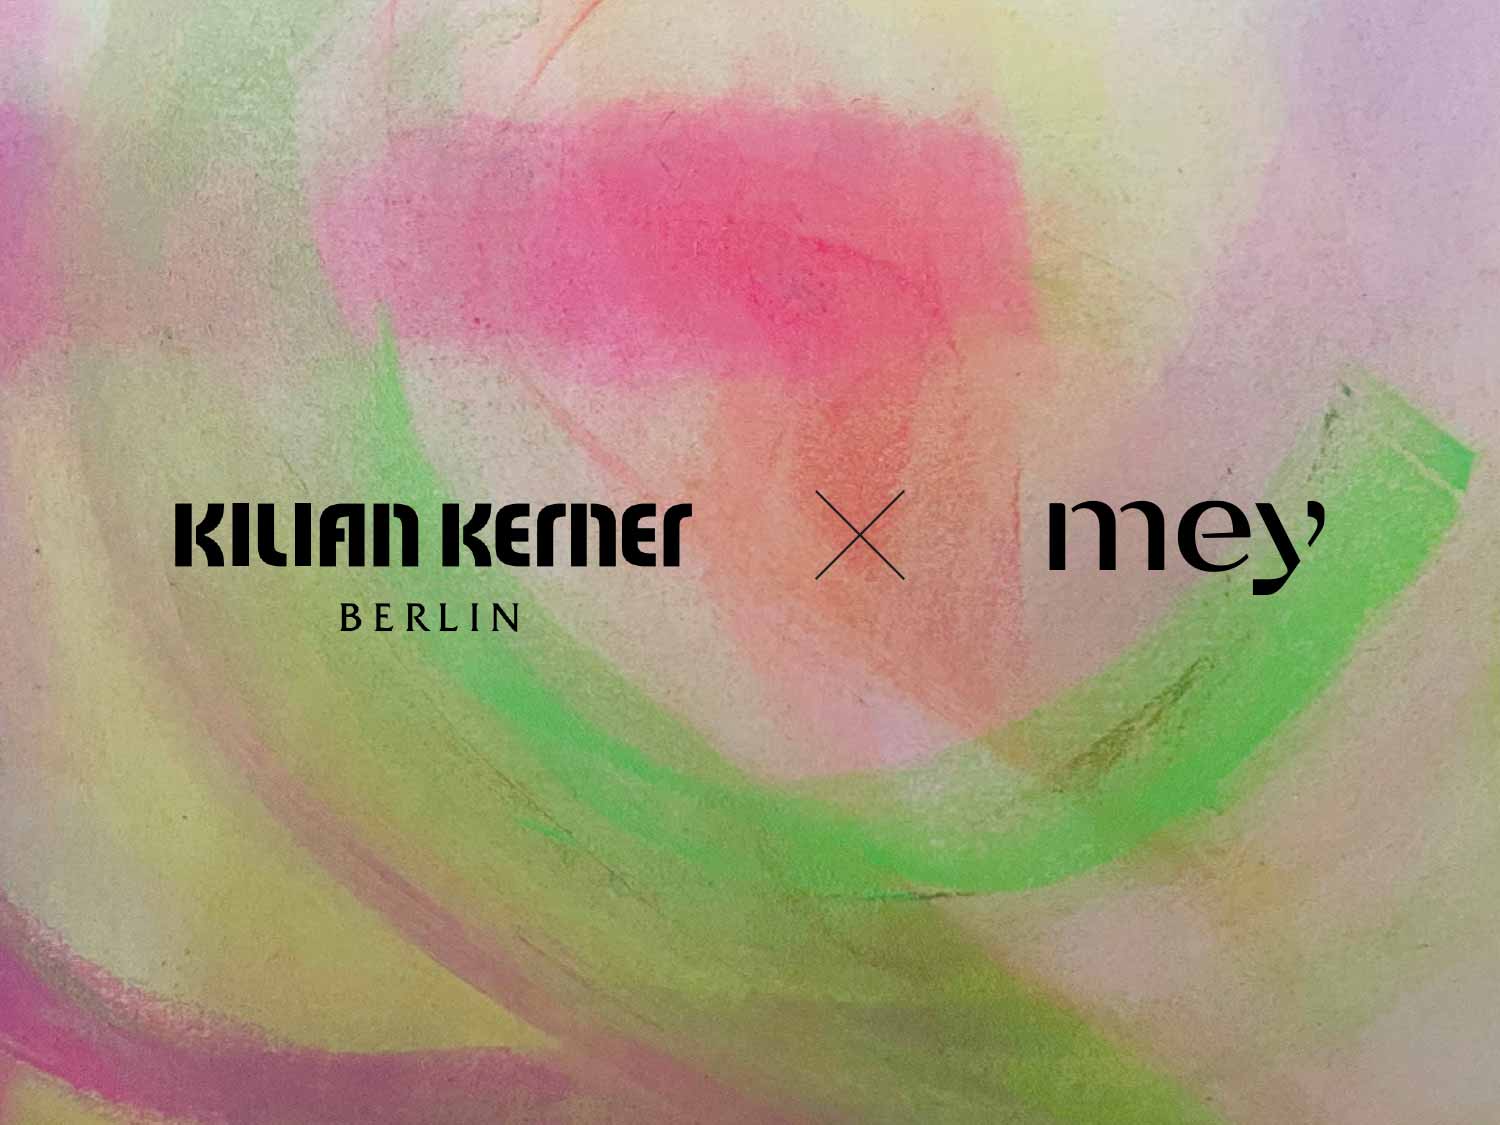 Livestream for the Kilian Kerner Fashionshow | mey® 